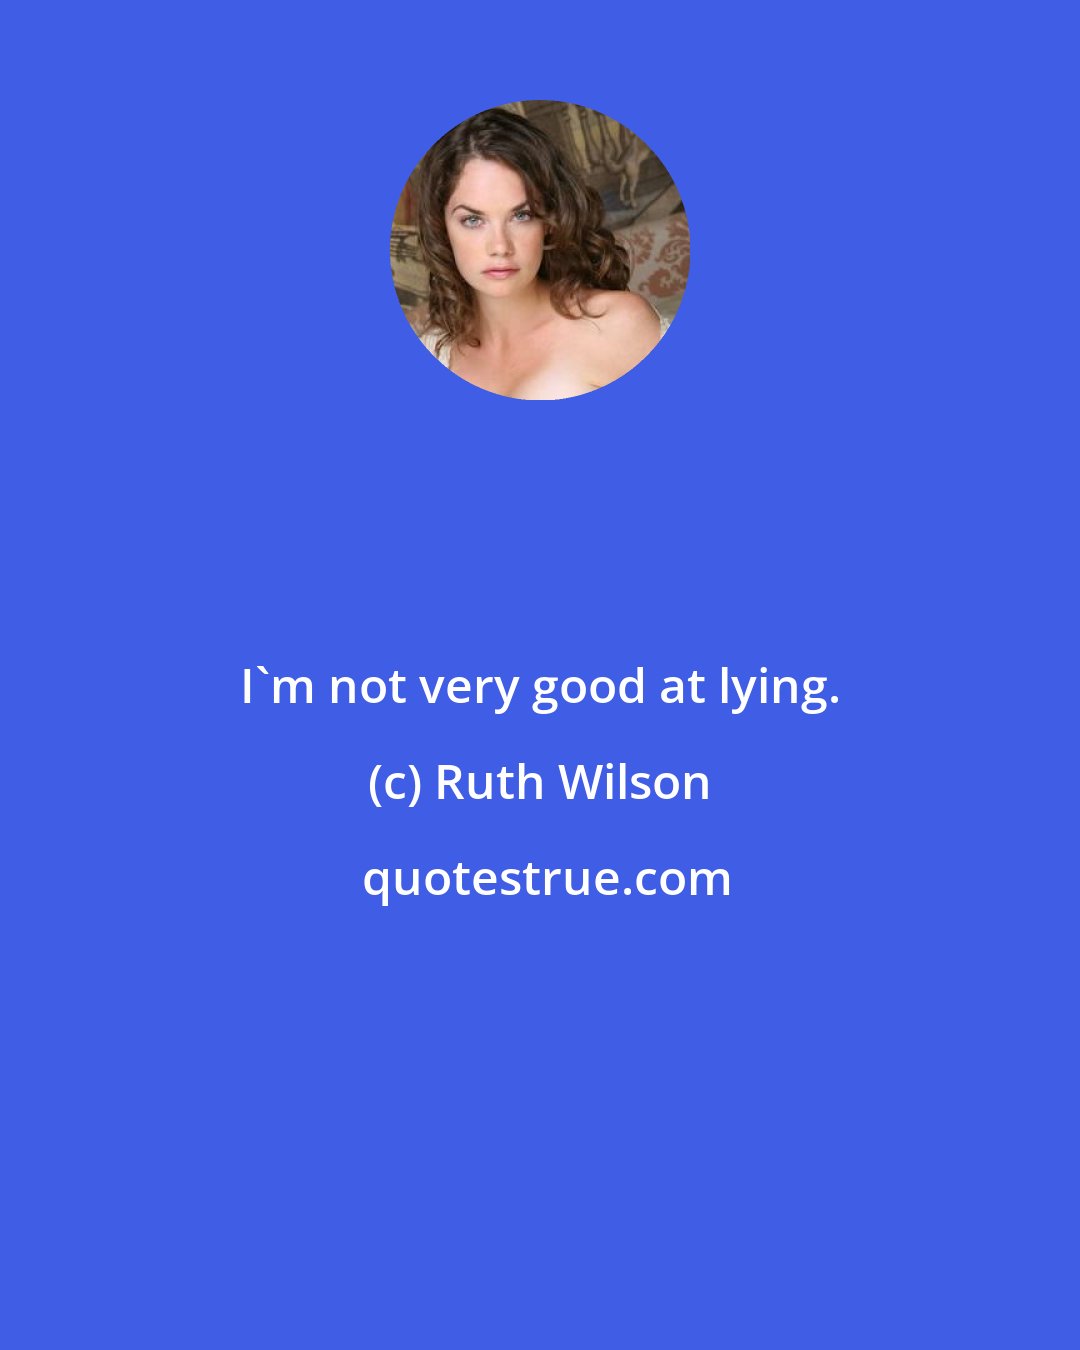 Ruth Wilson: I'm not very good at lying.